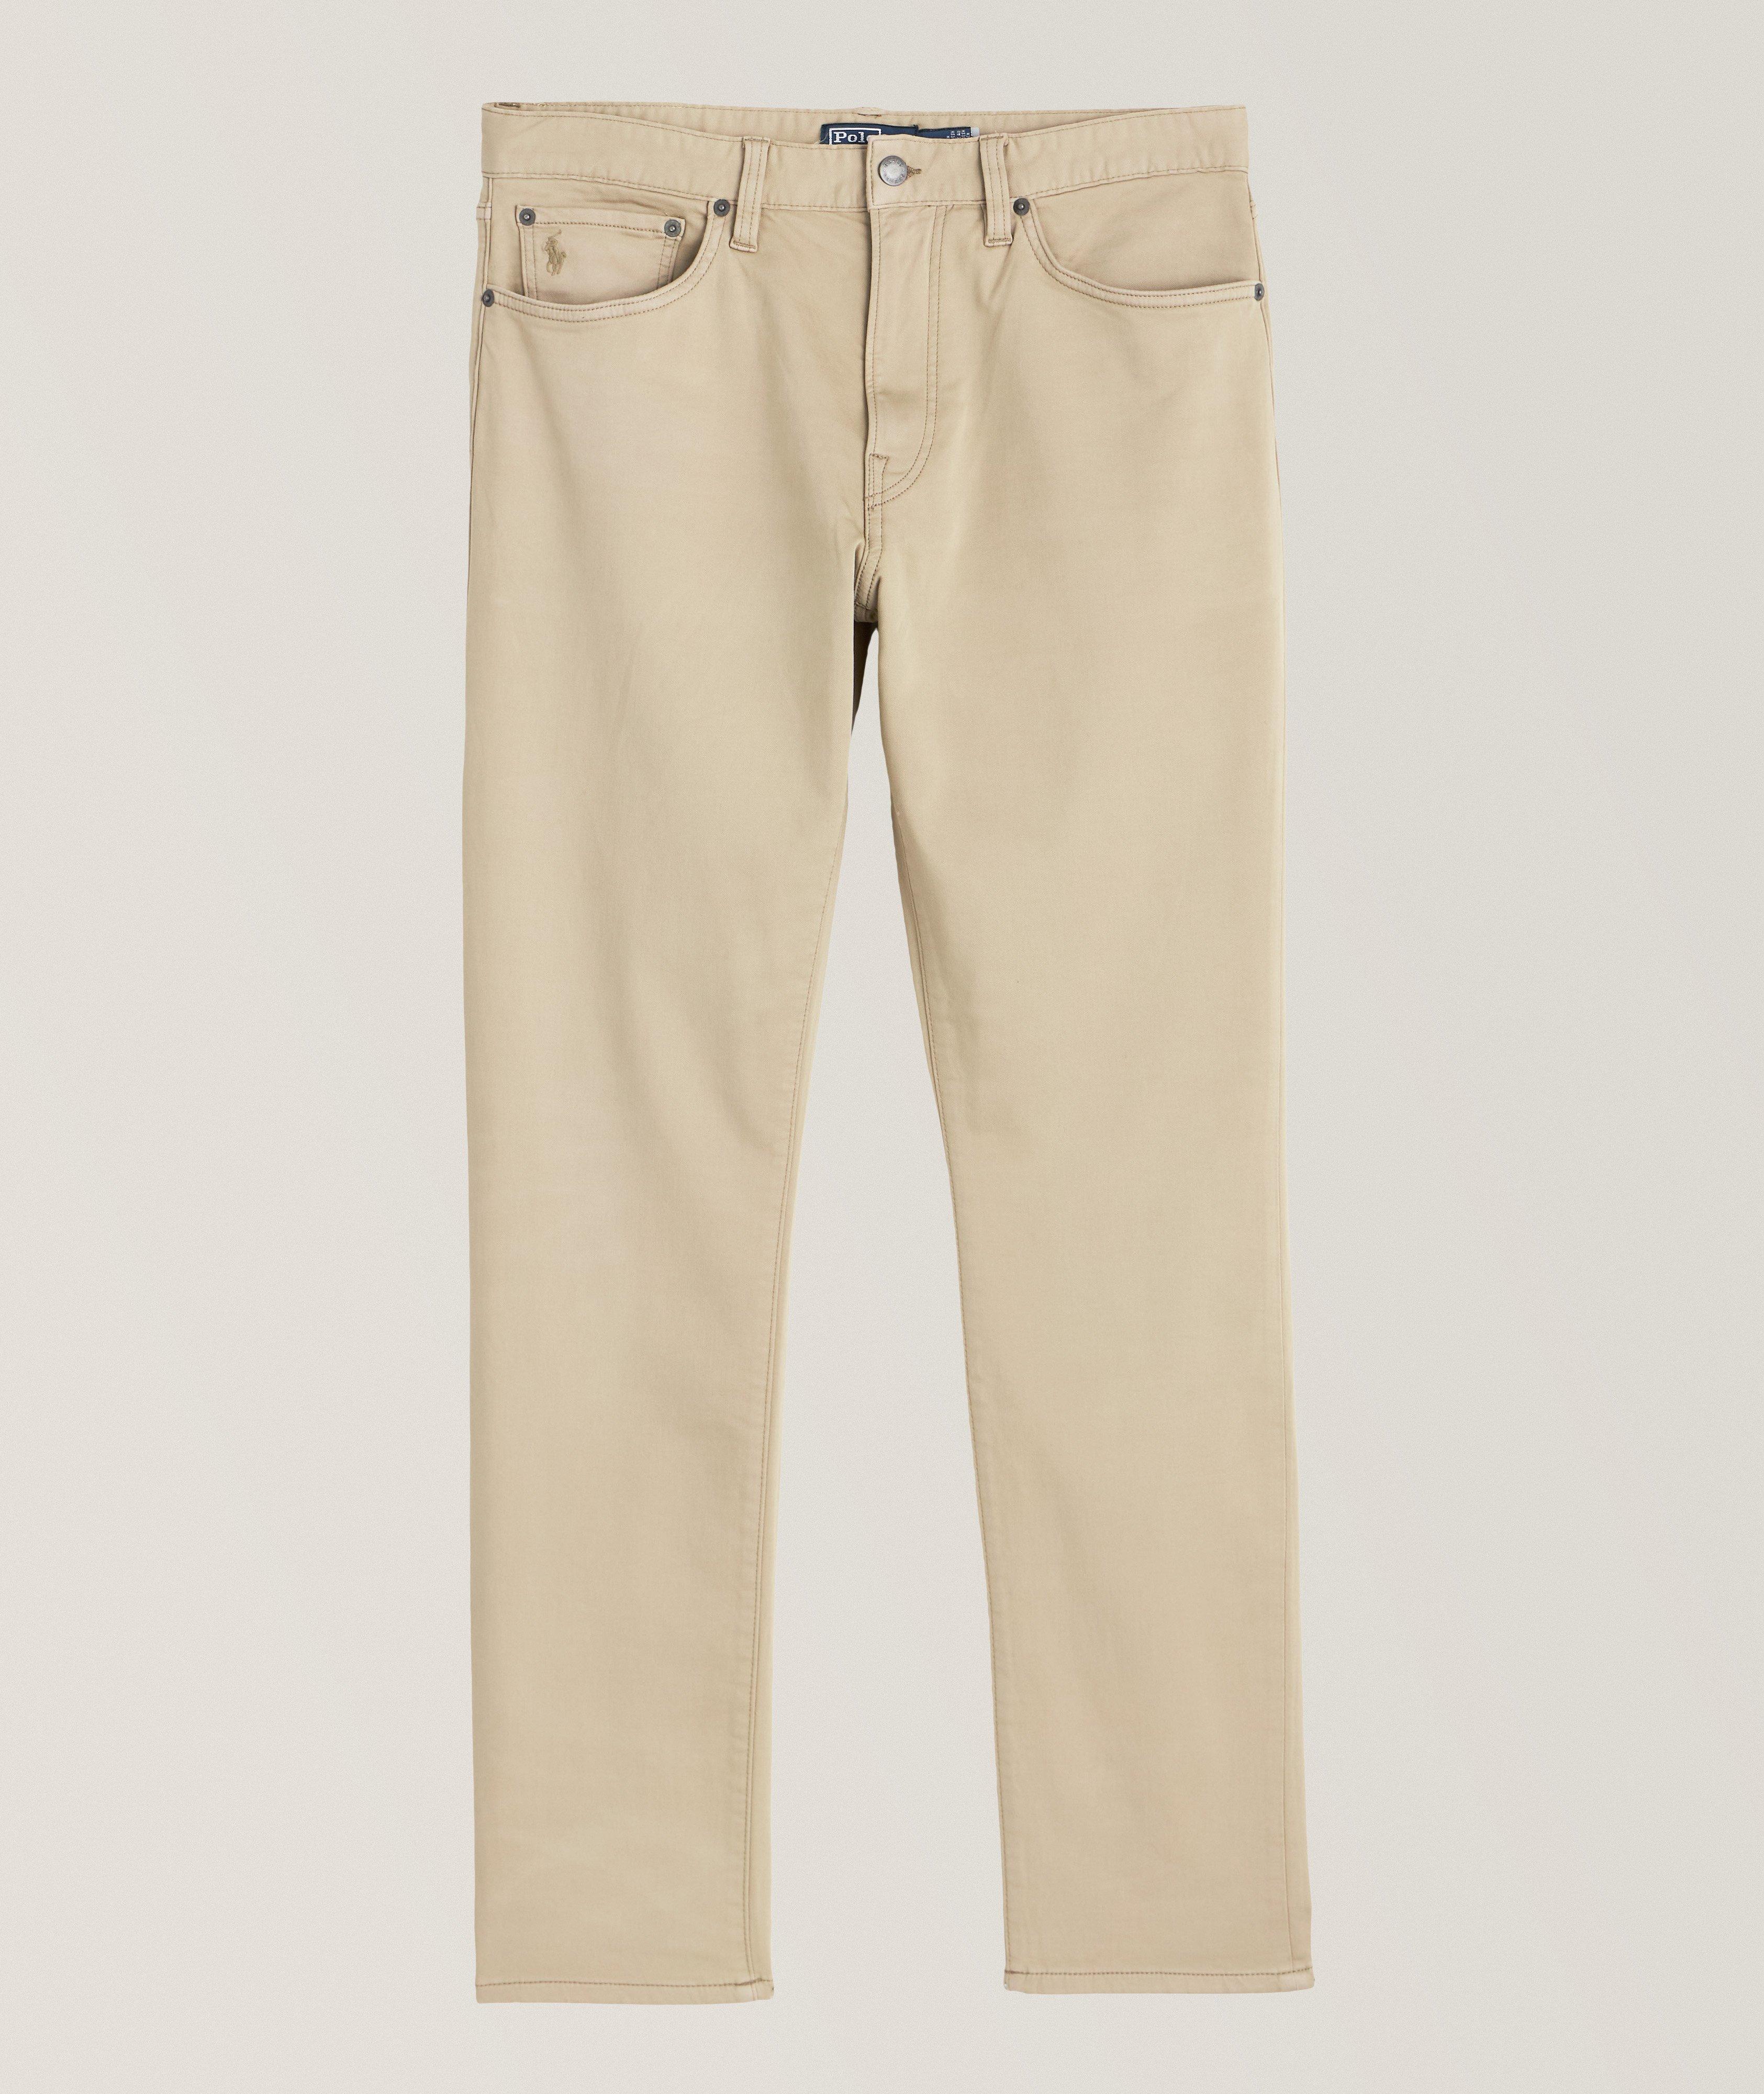 Cotton pants with paperbag waist brand POLO RALPH LAUREN —  /en